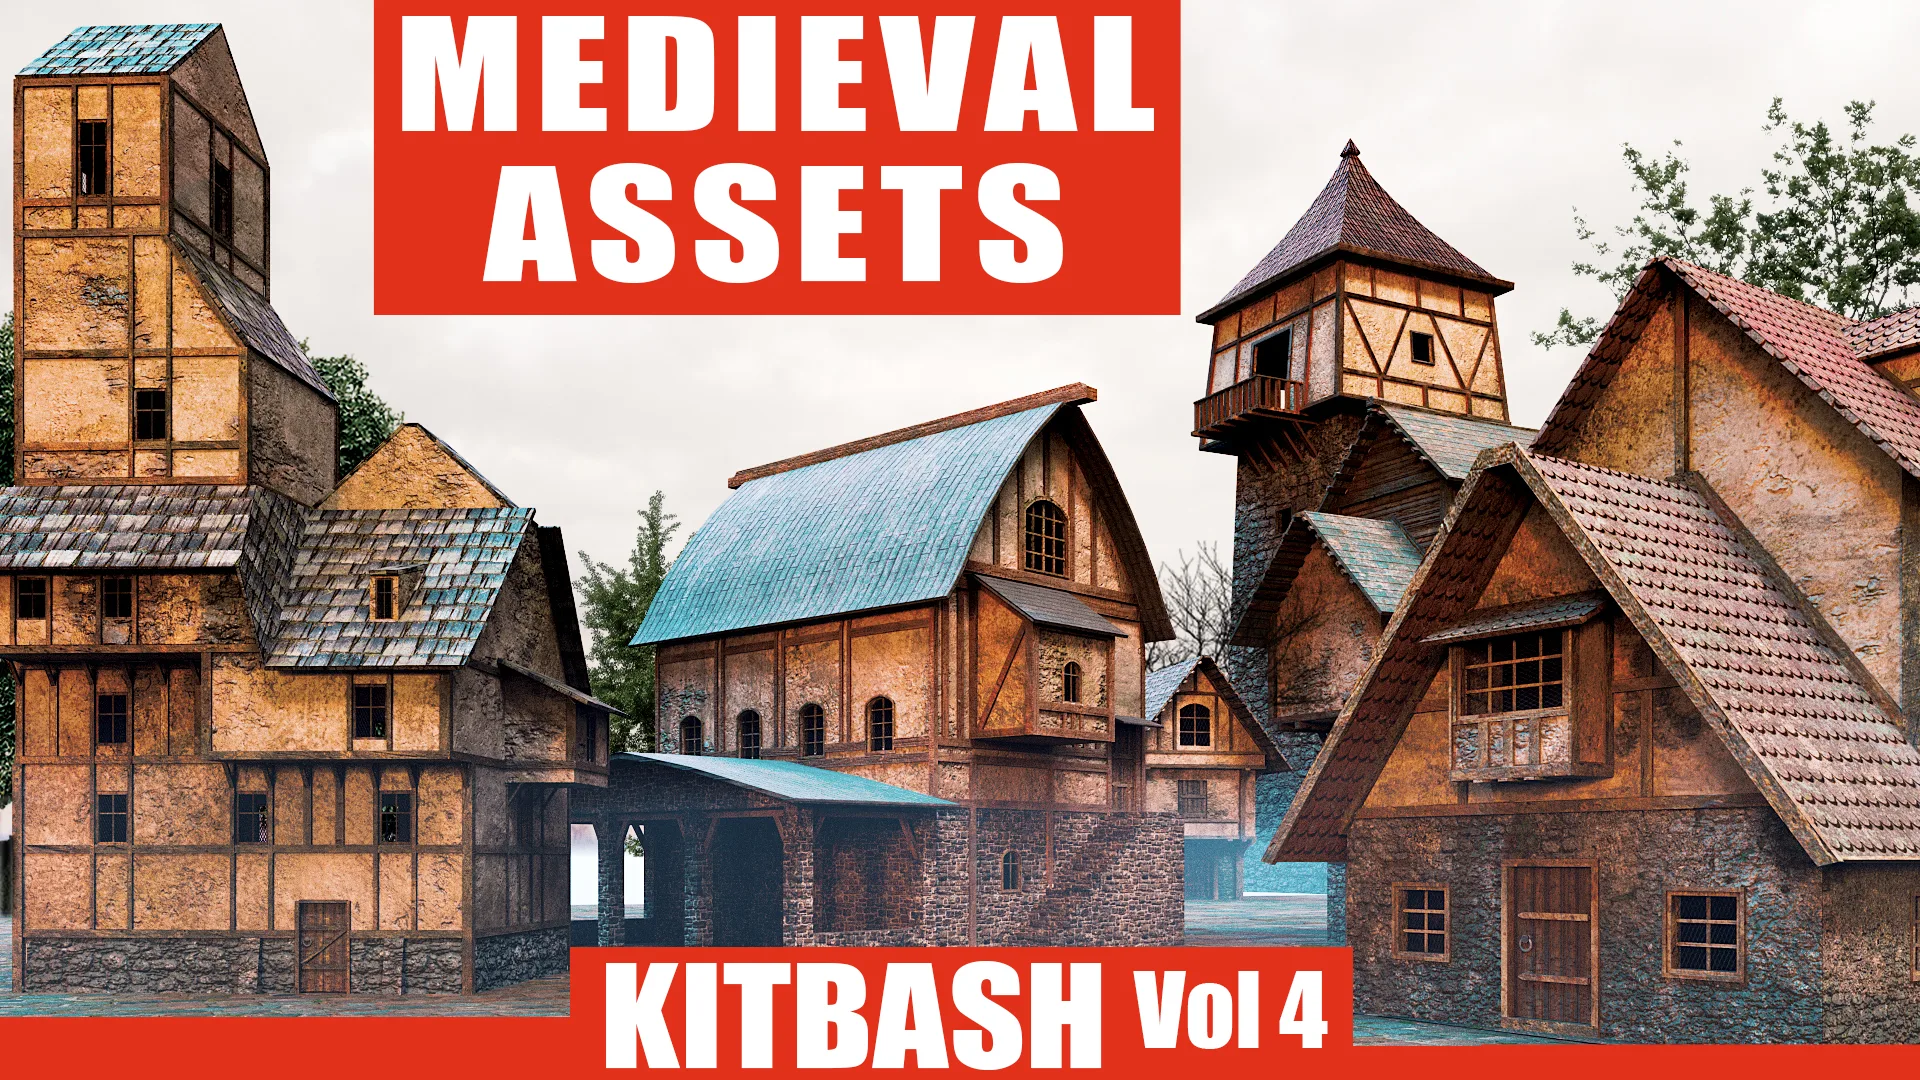 KITBASH : MEDIEVAL ASSETS +TEXTURES Vol 4